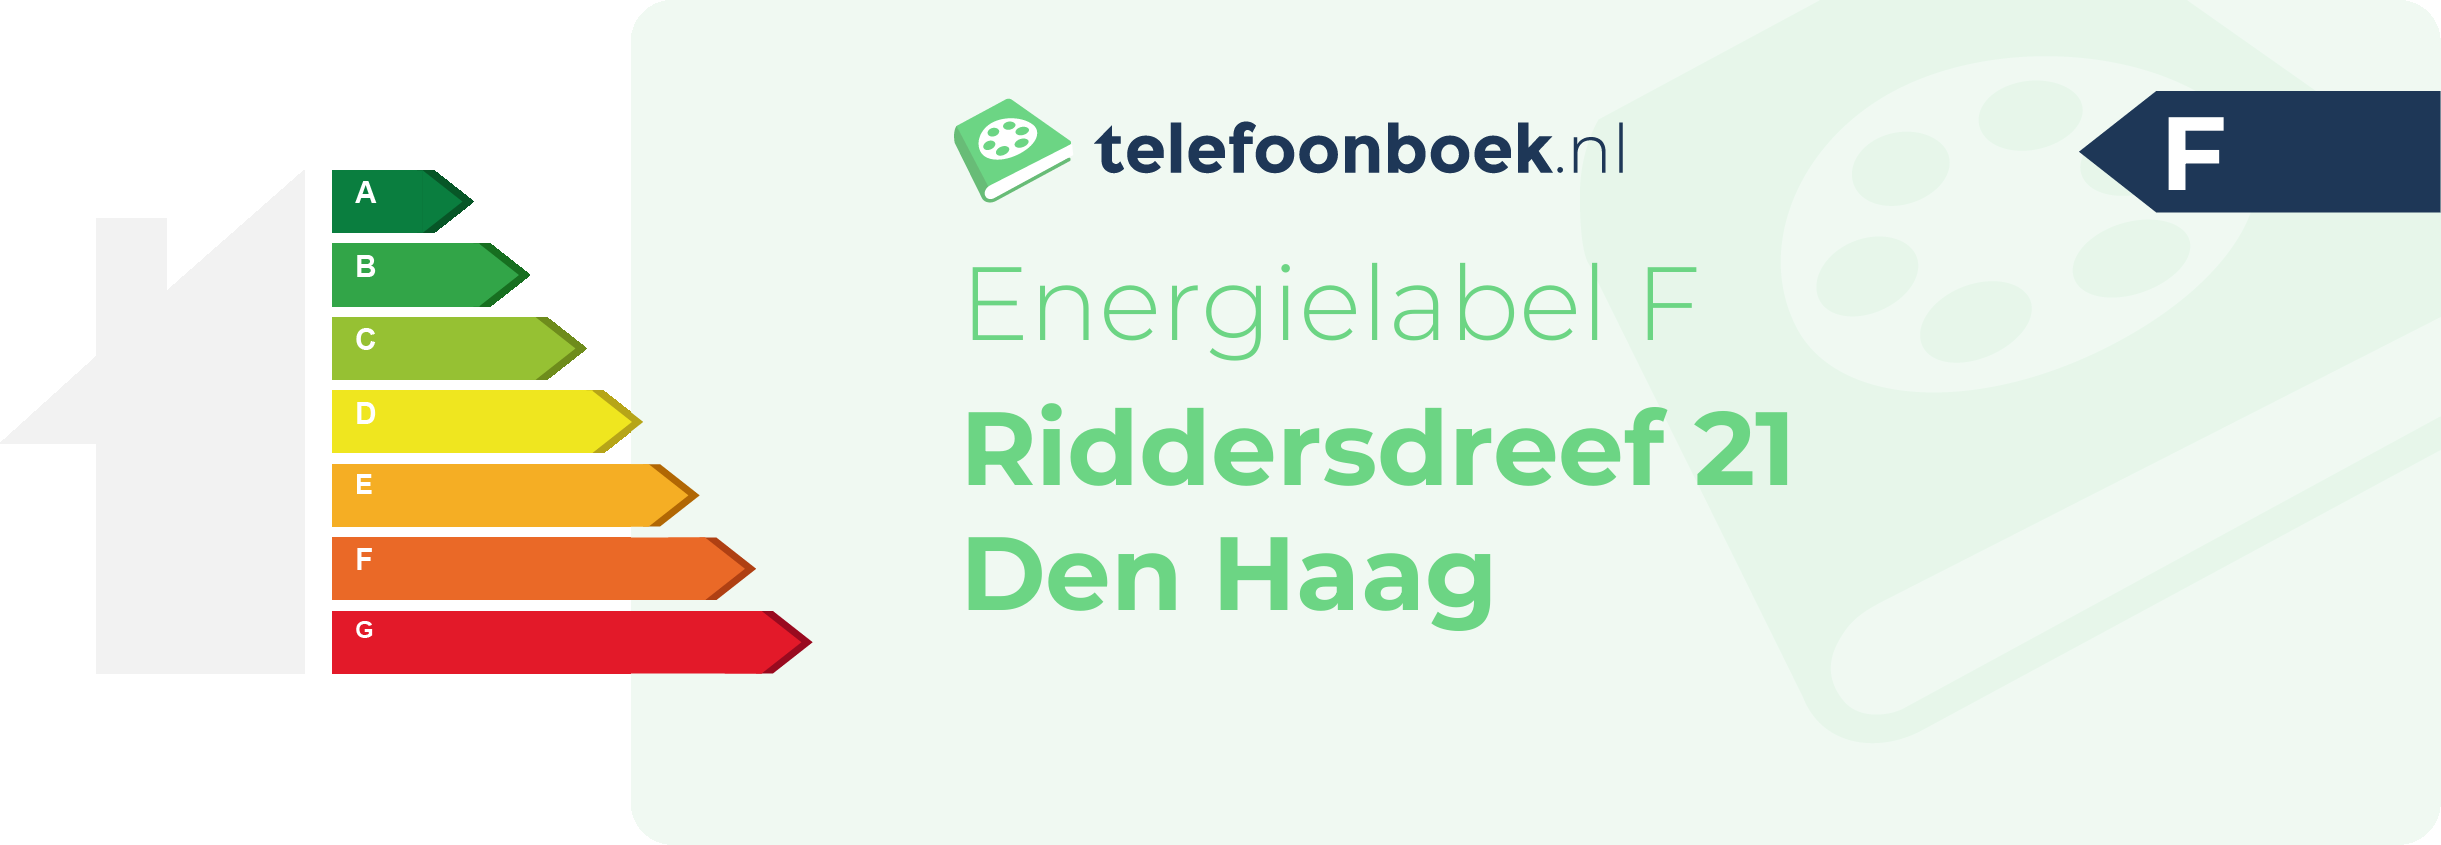 Energielabel Riddersdreef 21 Den Haag